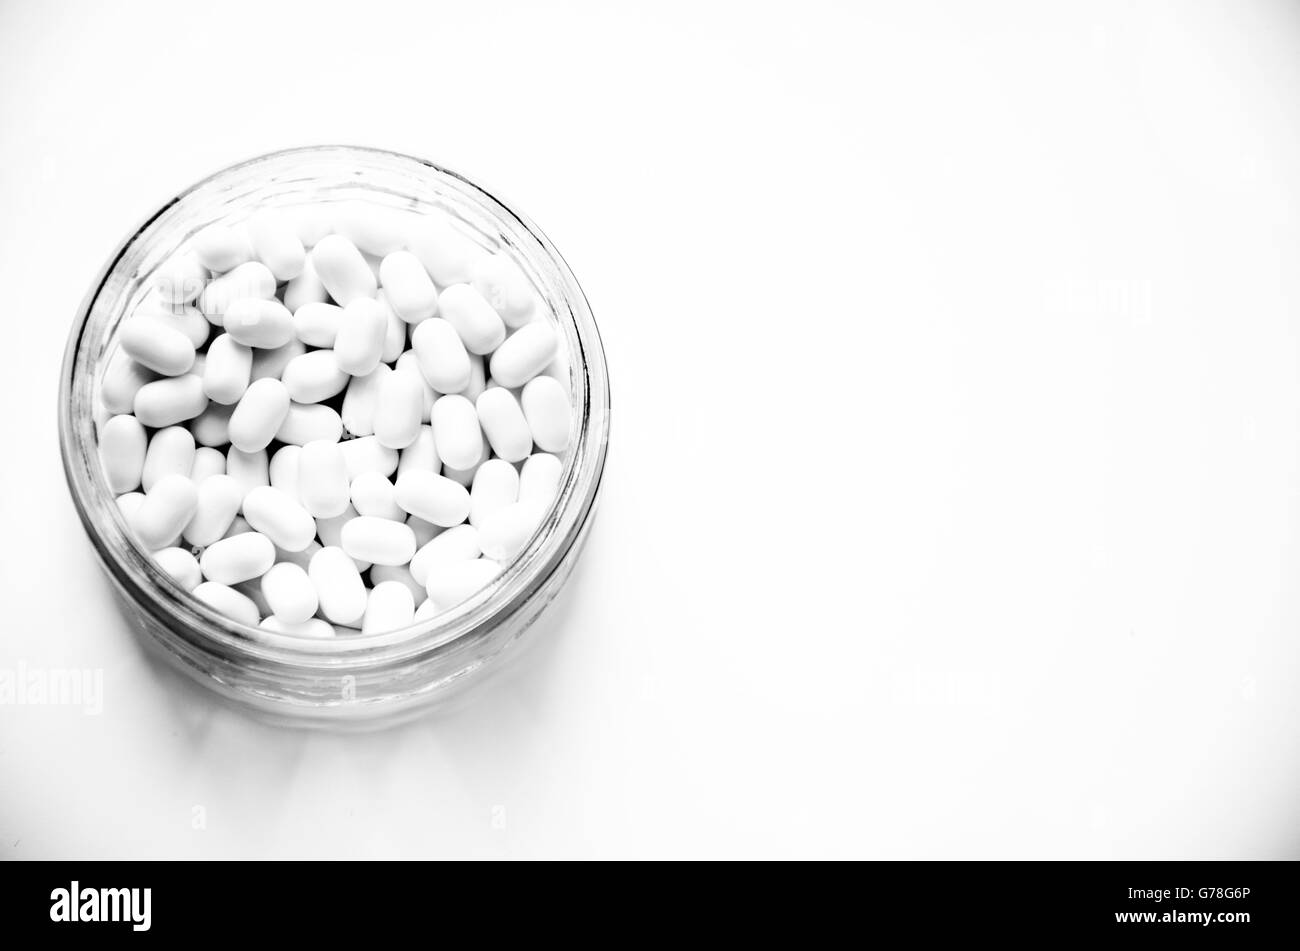 Monochrome pills in a dish Stock Photo